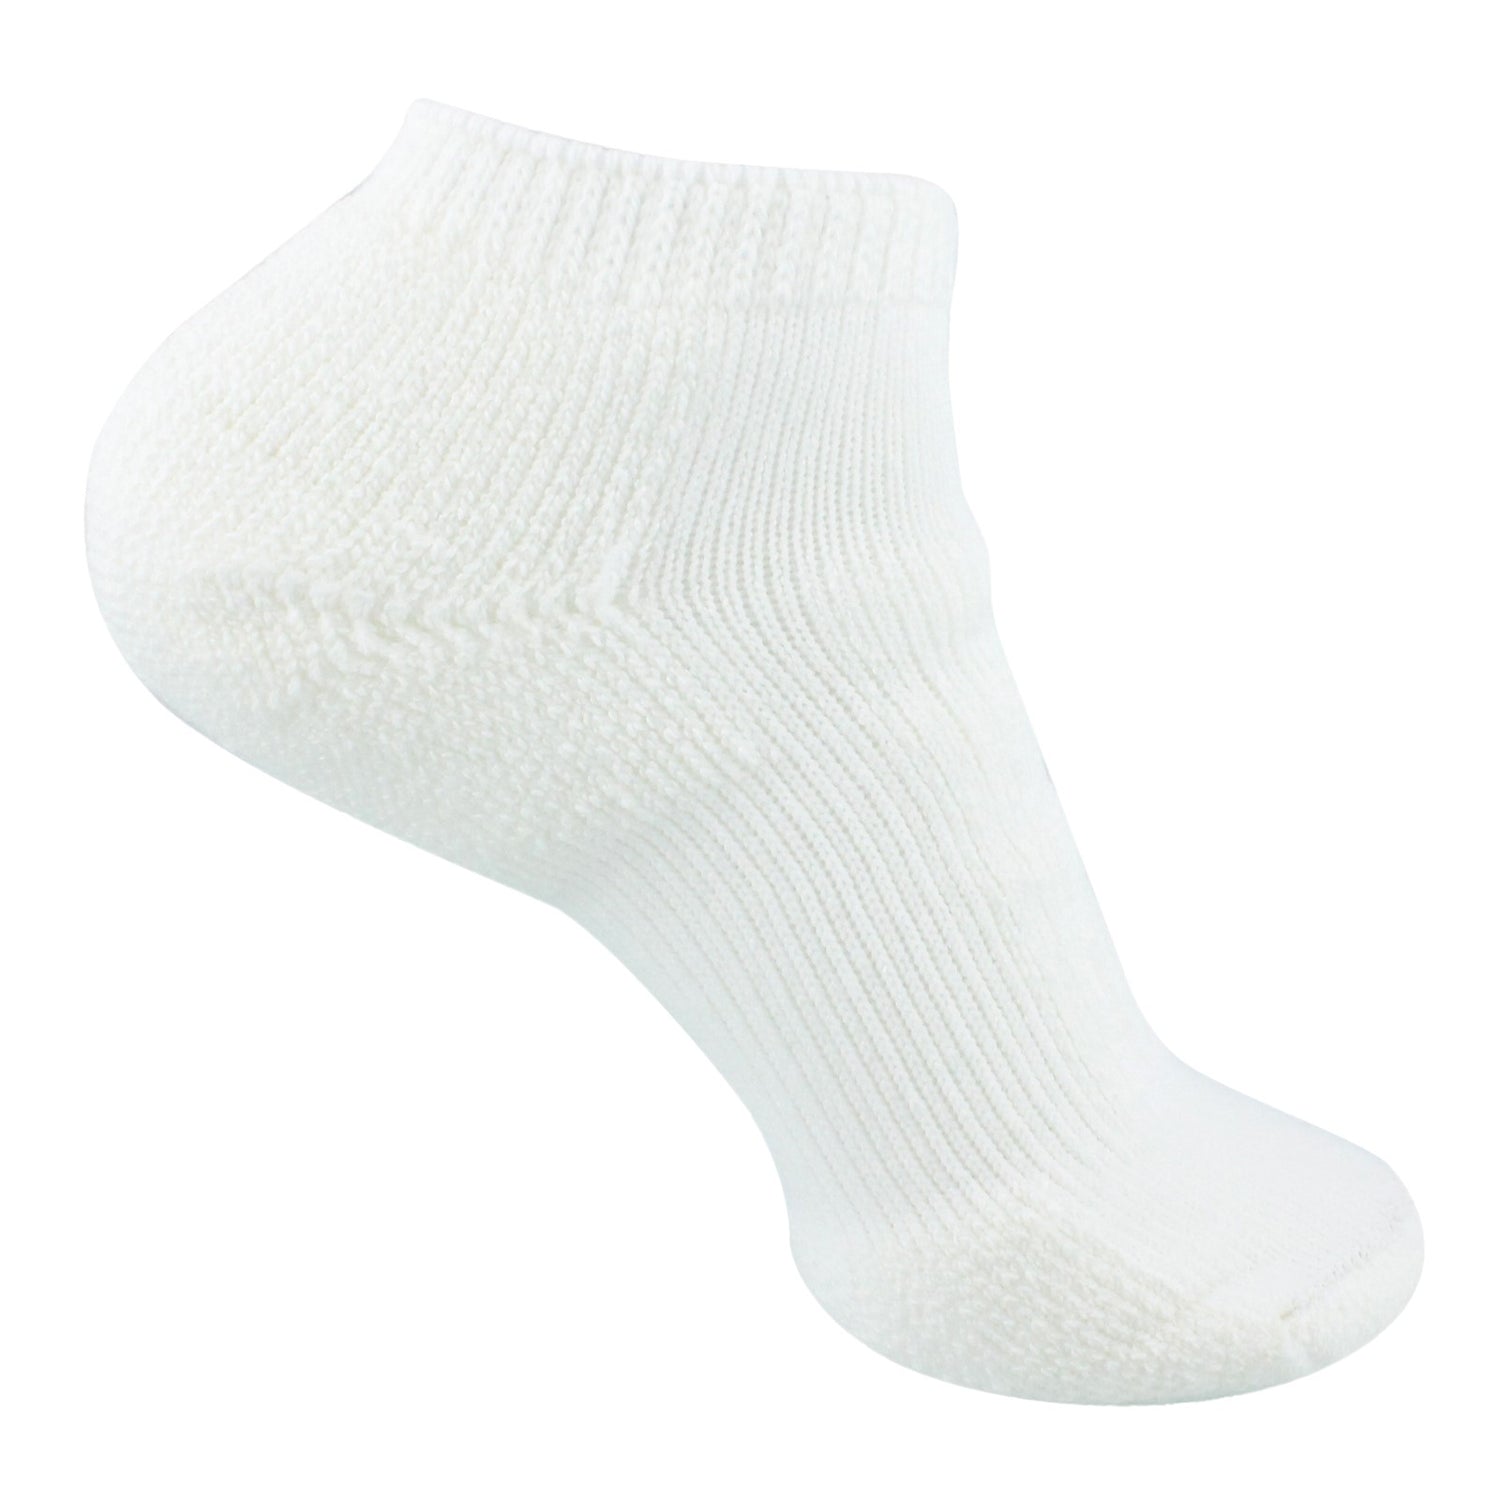 Peltz Shoes  Unisex Thorlo WMM Walking Socks - Large - 1 Pack White WMM-13 004